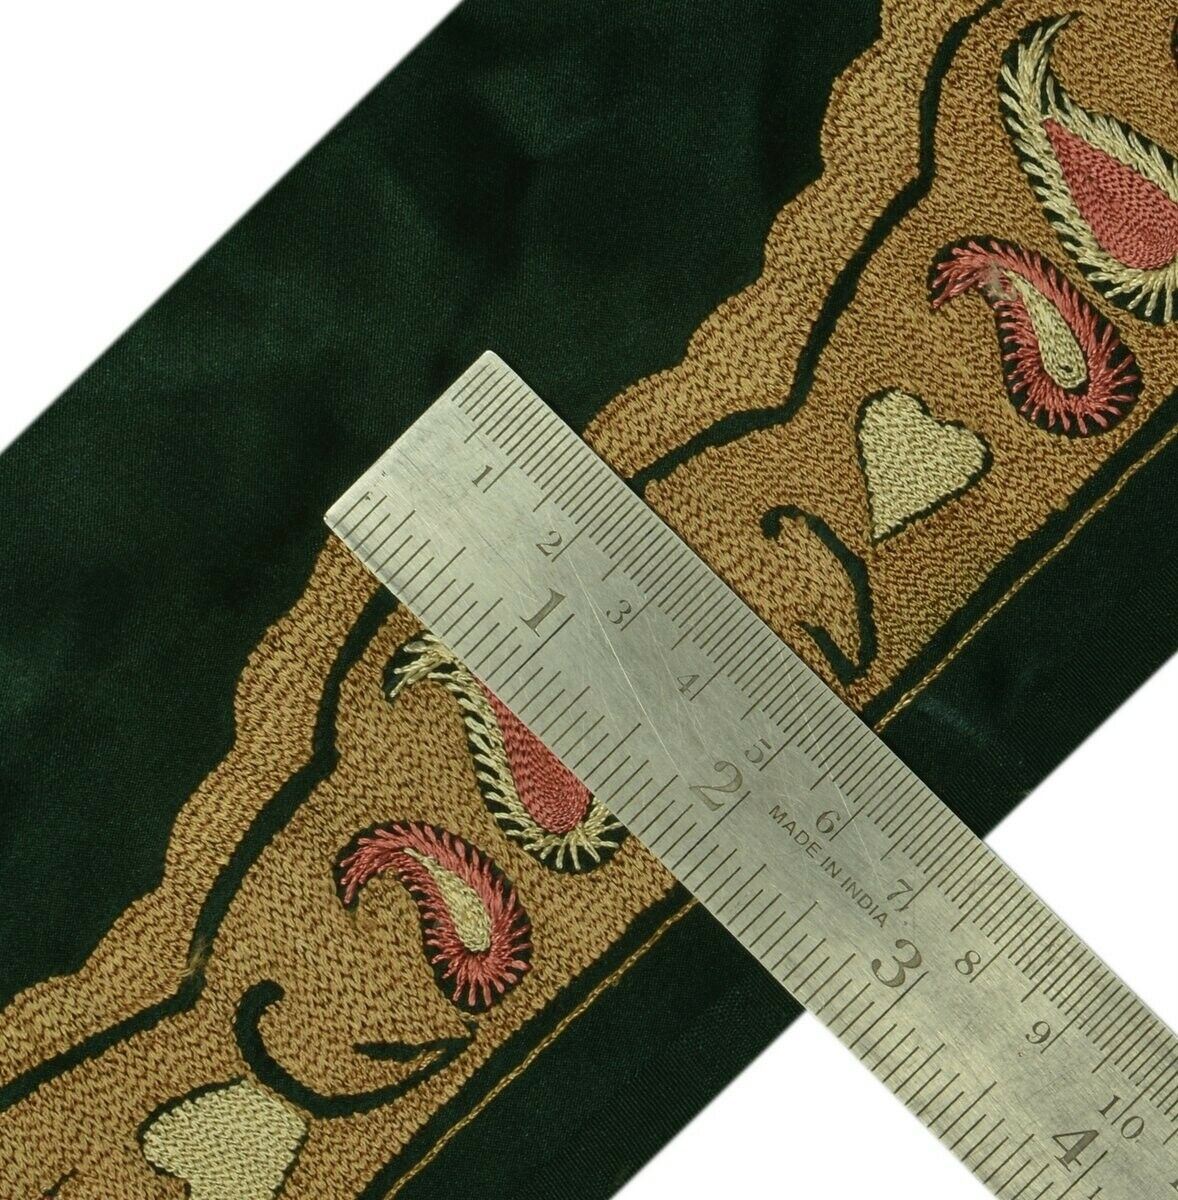 Vintage Sari Border Indian Craft Trim Embroidered Green Sewing Ribbon Lace